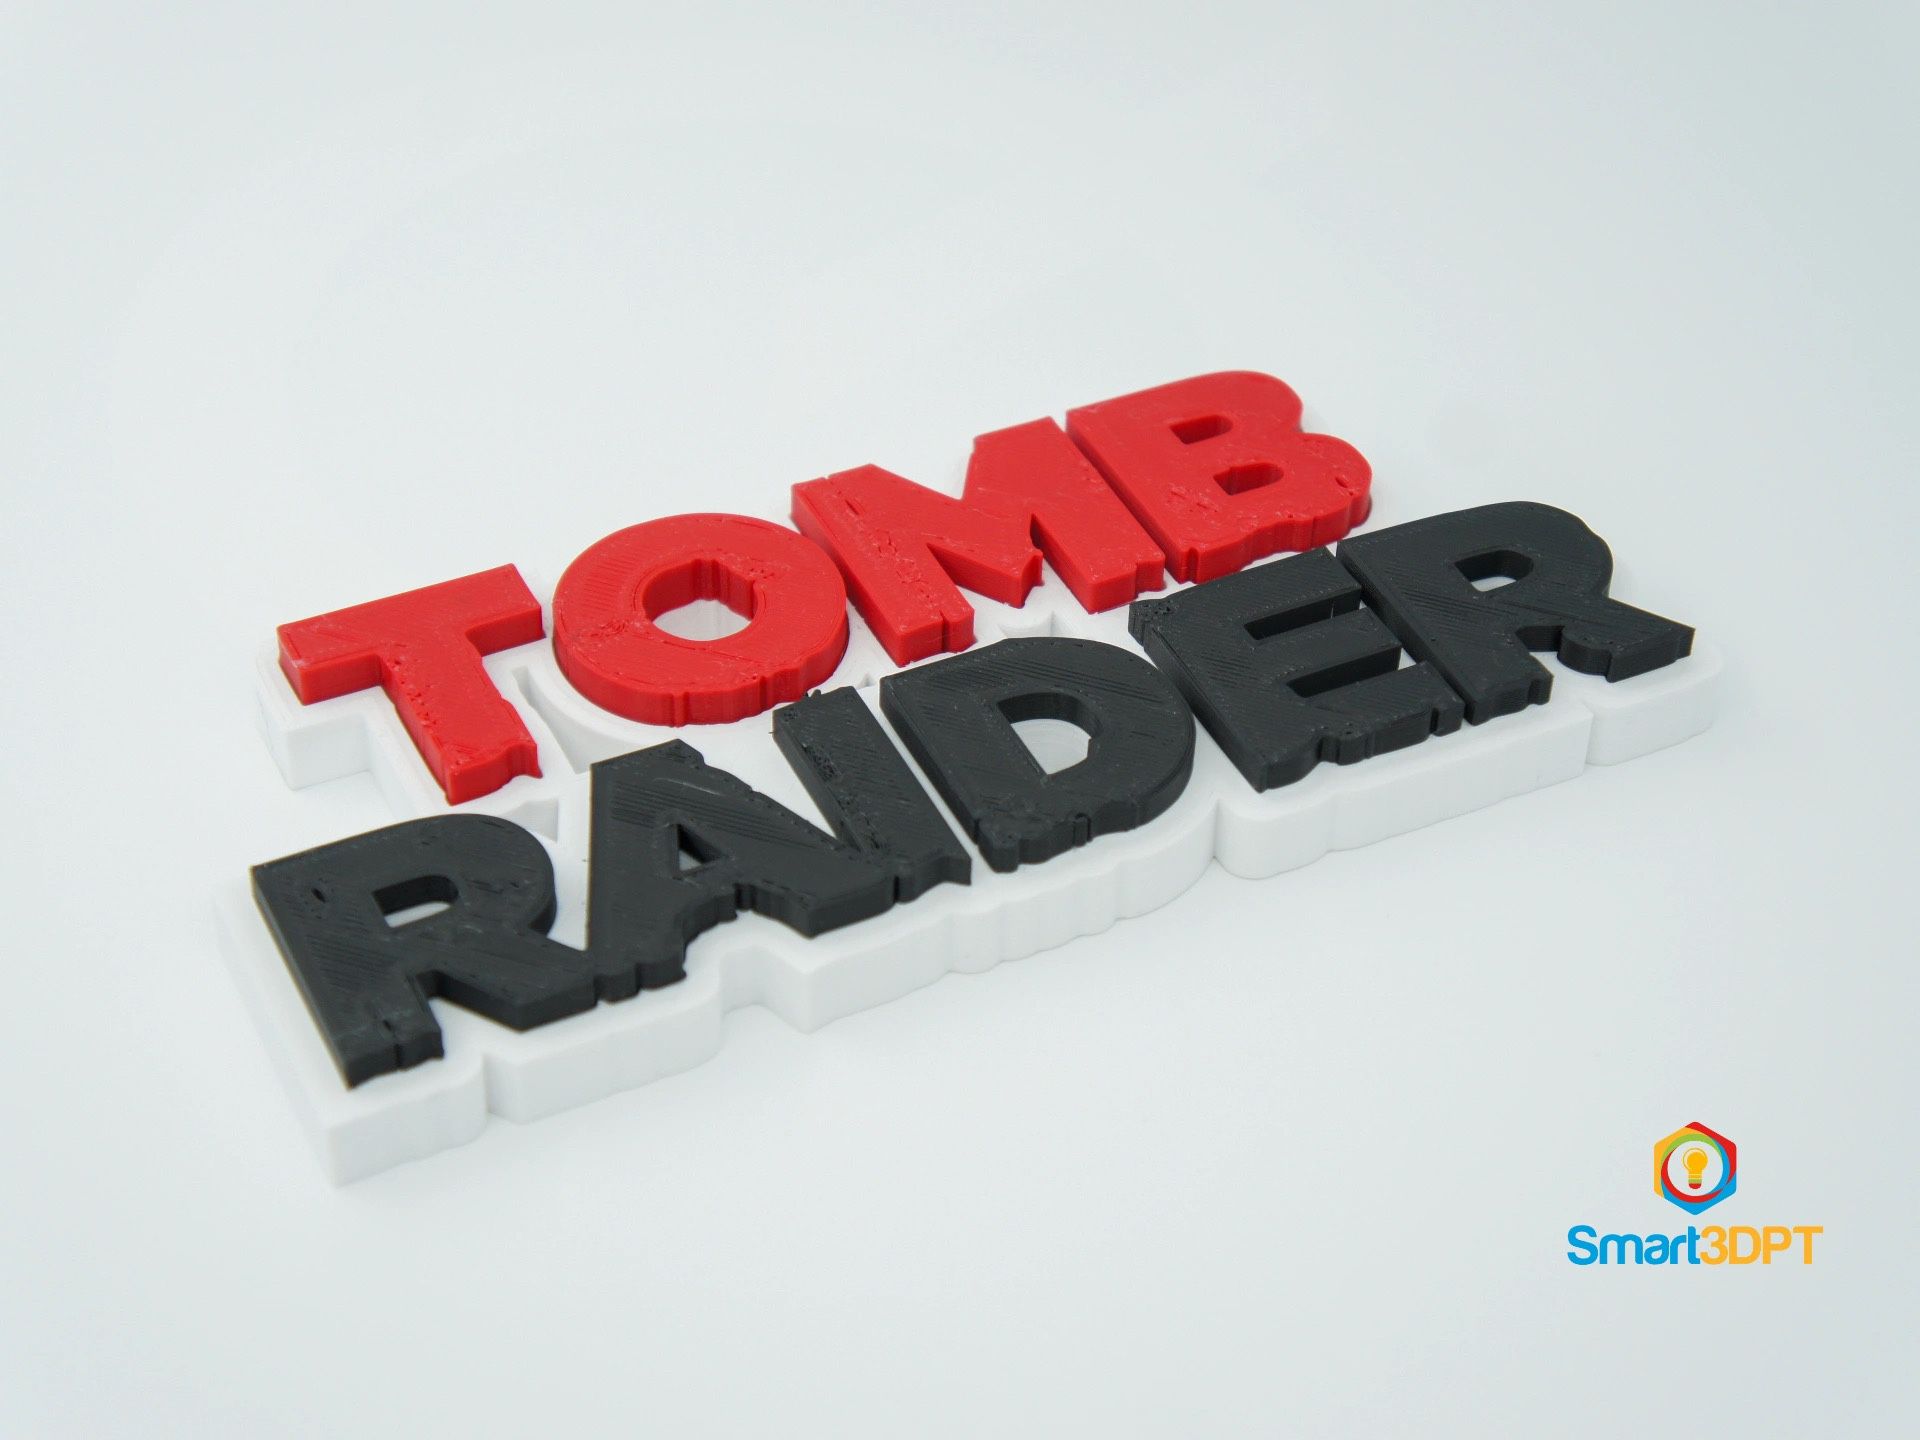 Sony PlayStation Tomb Raider 1-1 Sign Display 